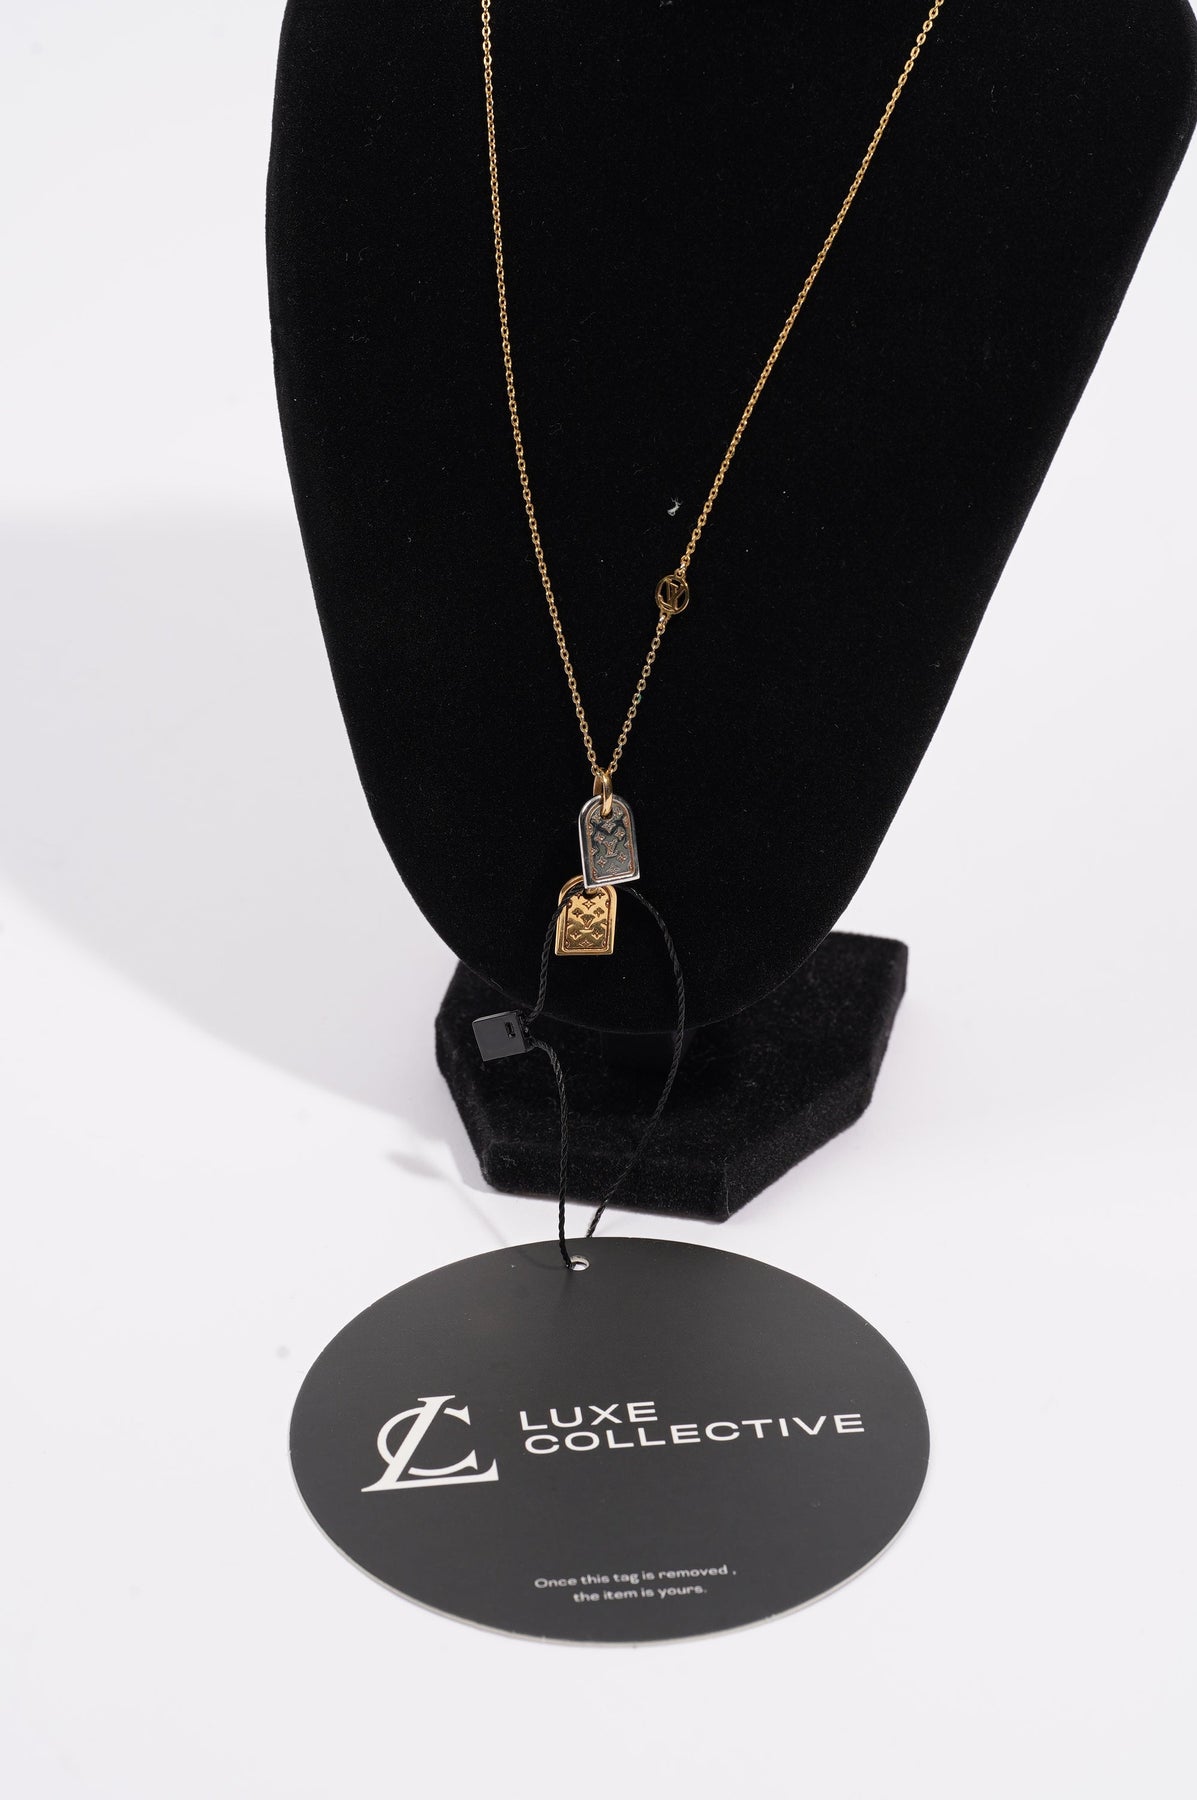 Louis Vuitton - Authenticated Nanogram Necklace - Metal Gold for Women, Never Worn